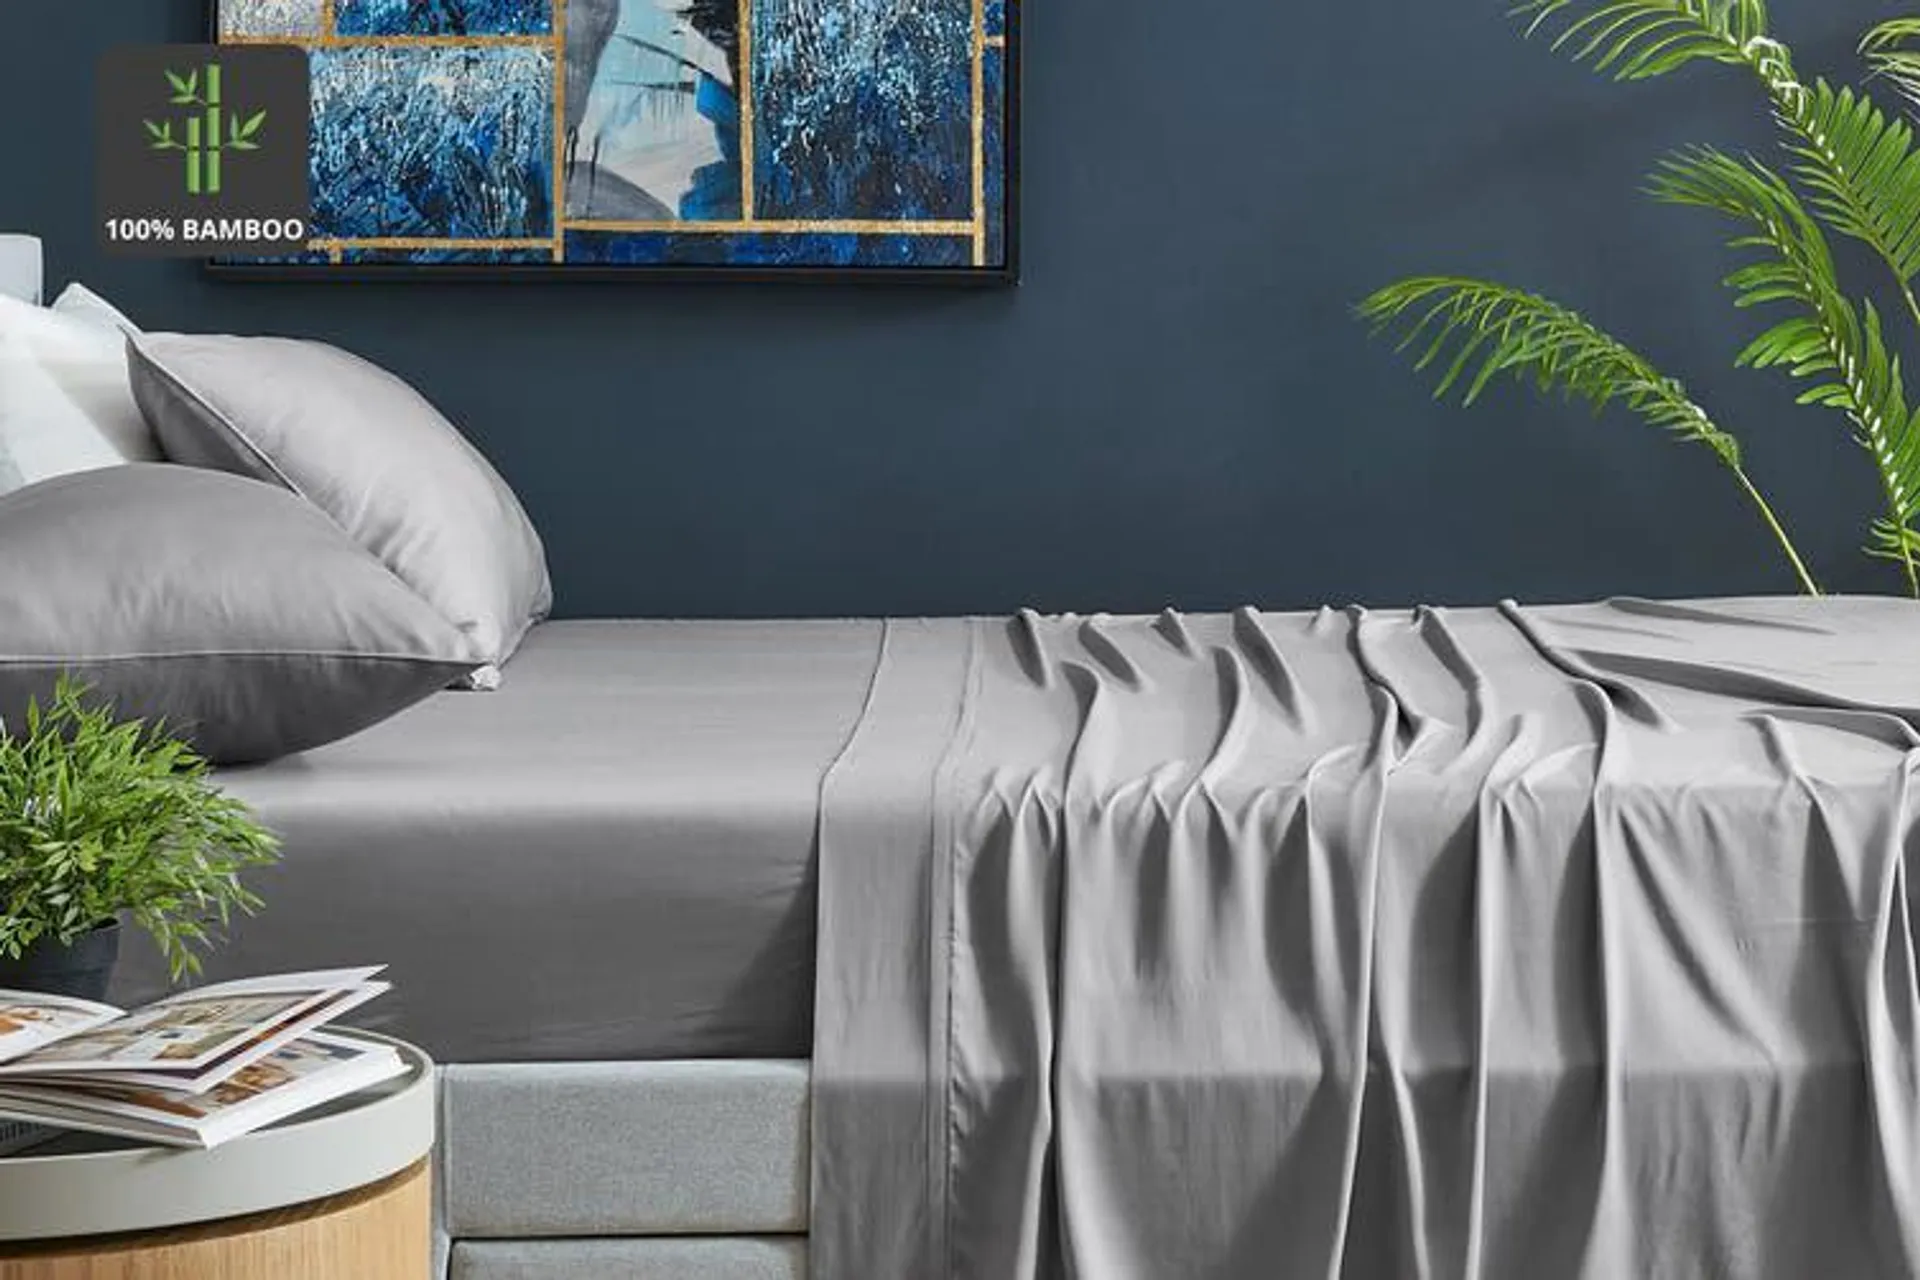 Ovela 100% Natural Bamboo Bed Sheet Set (Silver, Single)